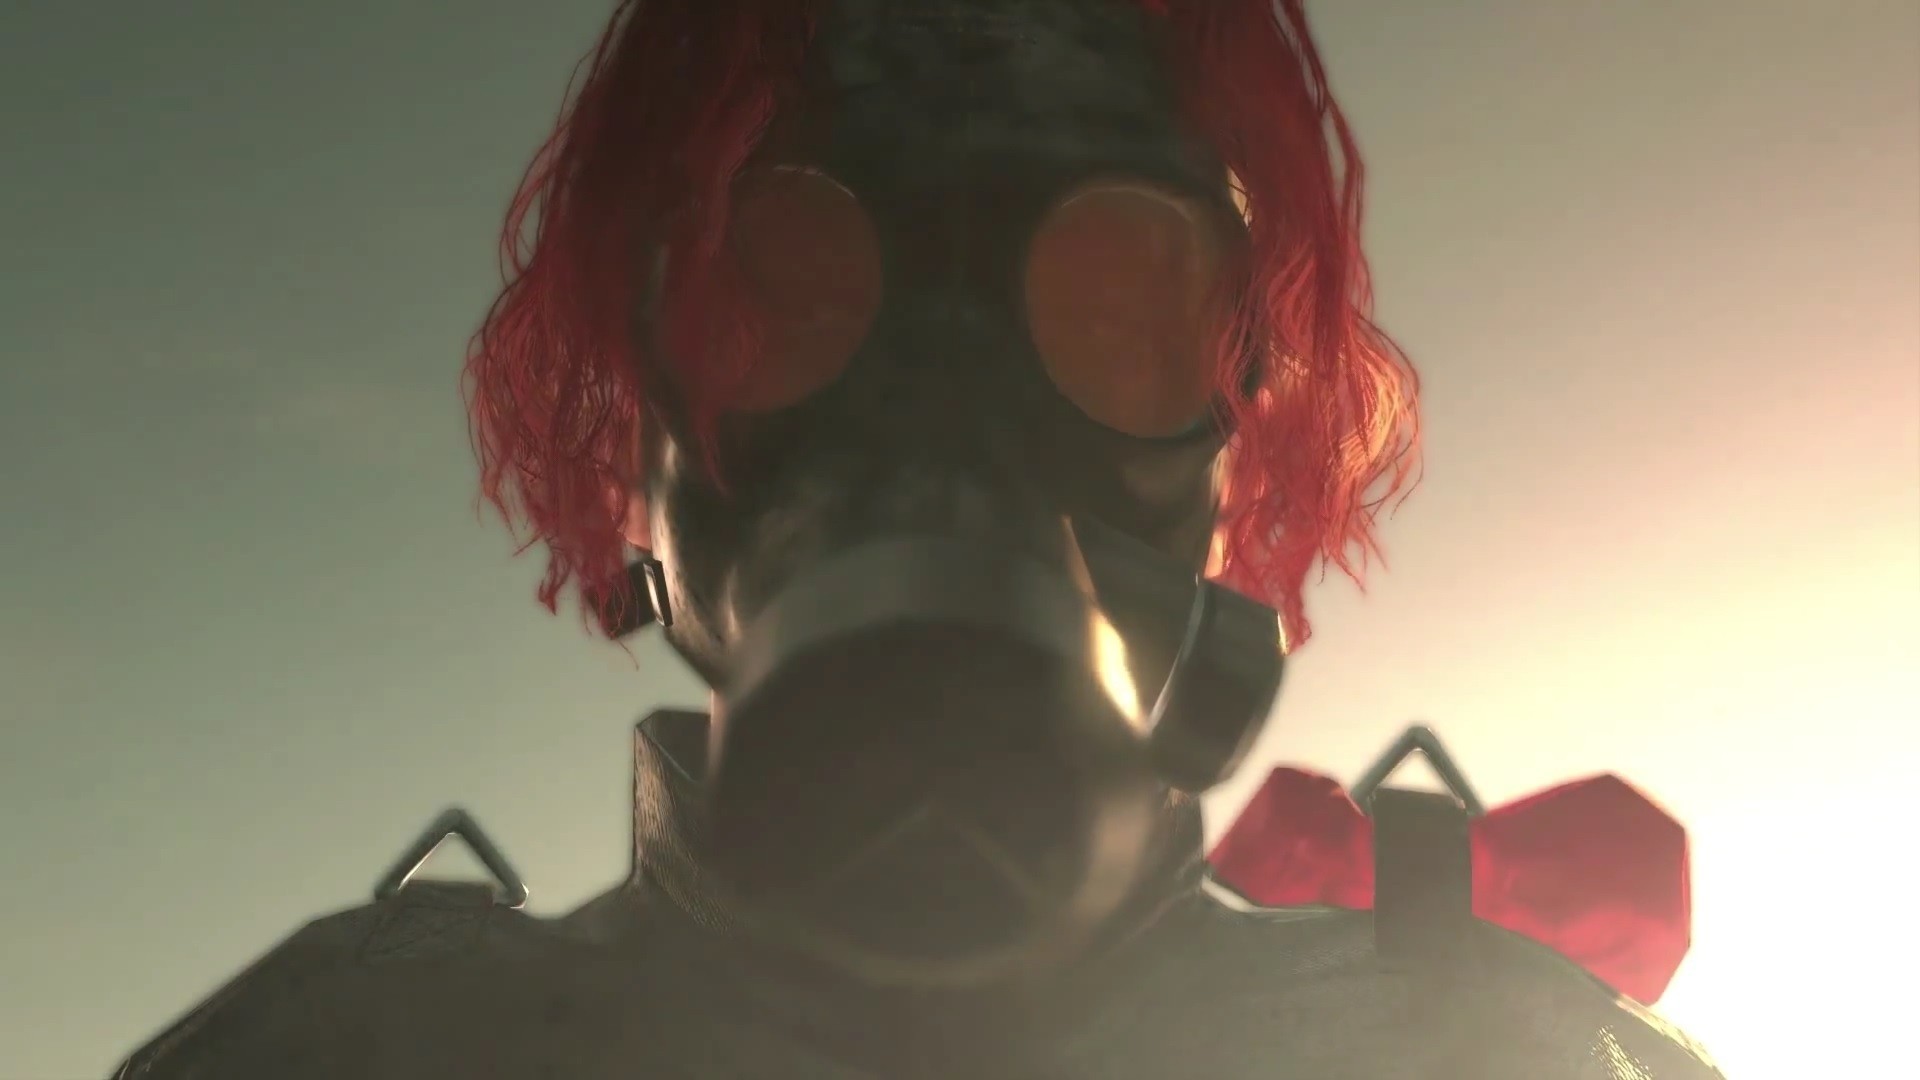 gas masks, Redhead, Metal Gear Solid, Metal Gear Solid V: The Phantom Pain Wallpaper